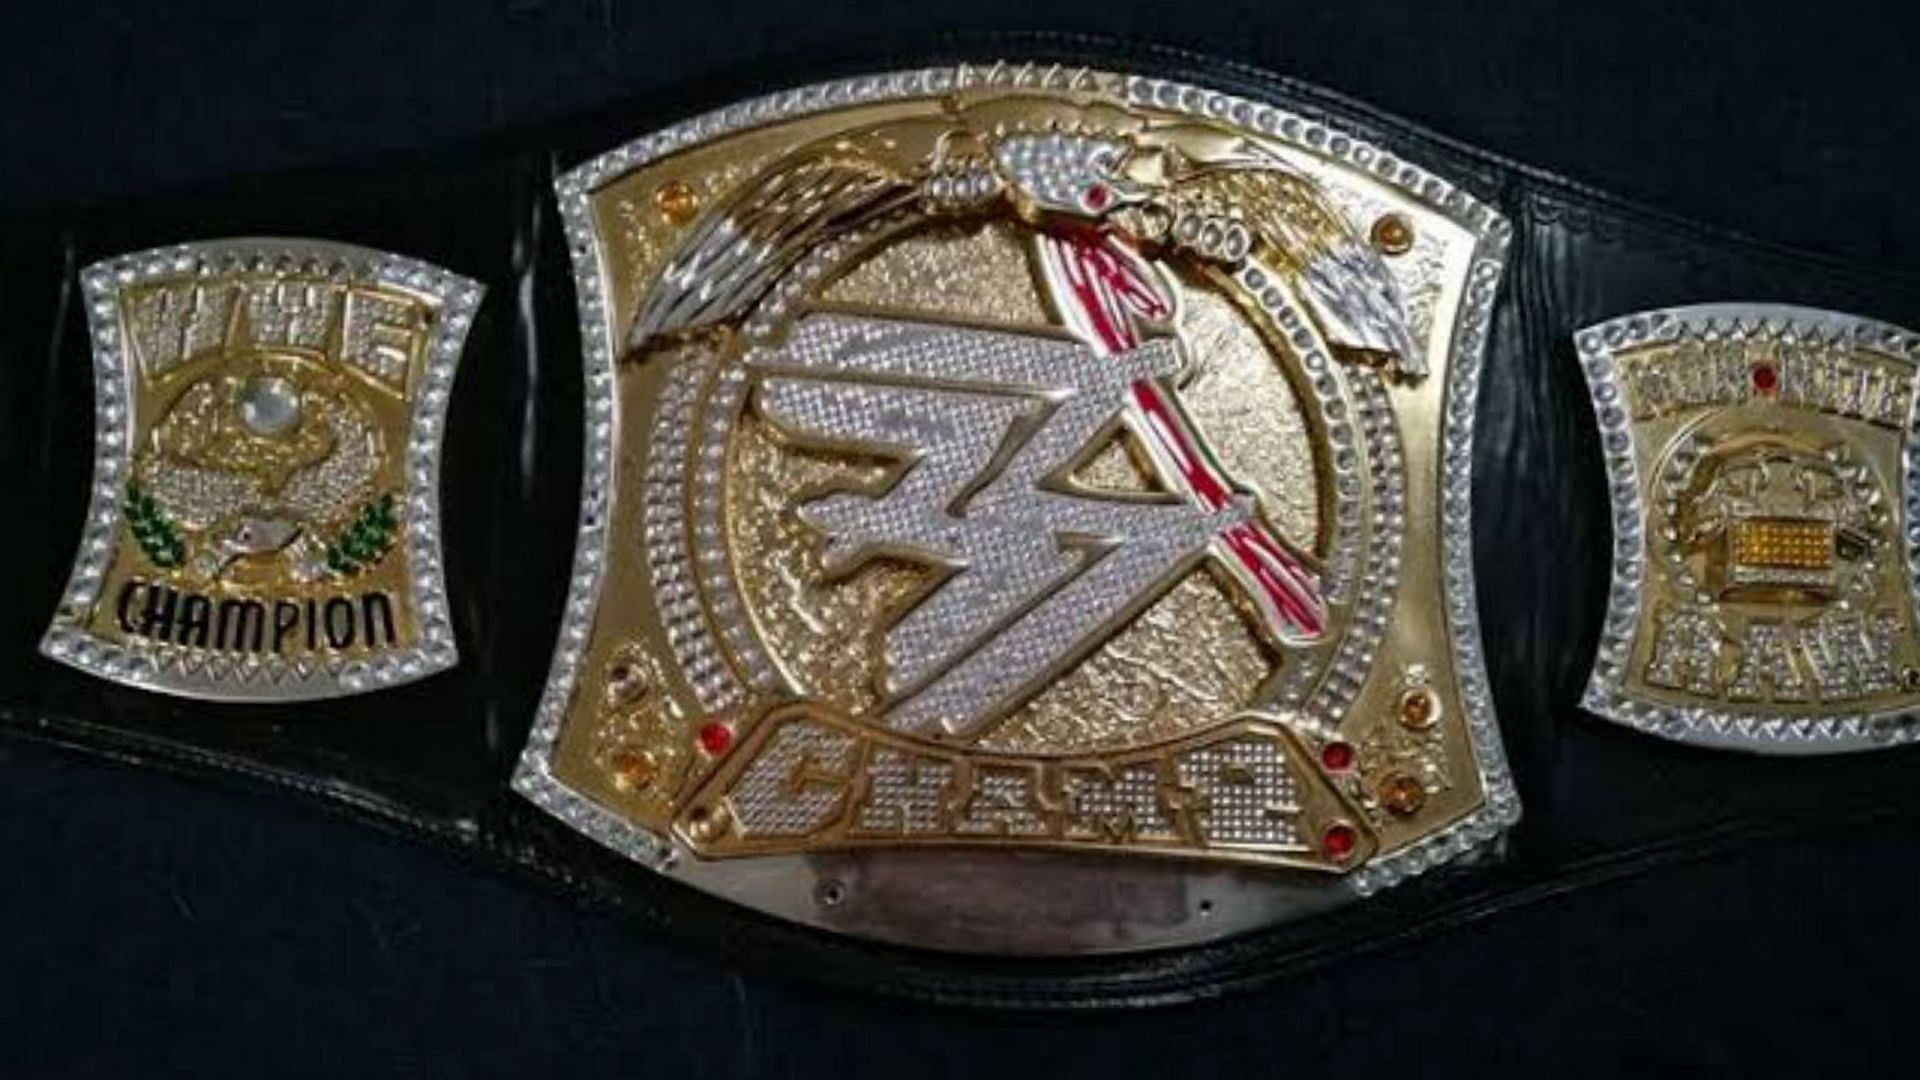 john cena wwe champion 2022 belt